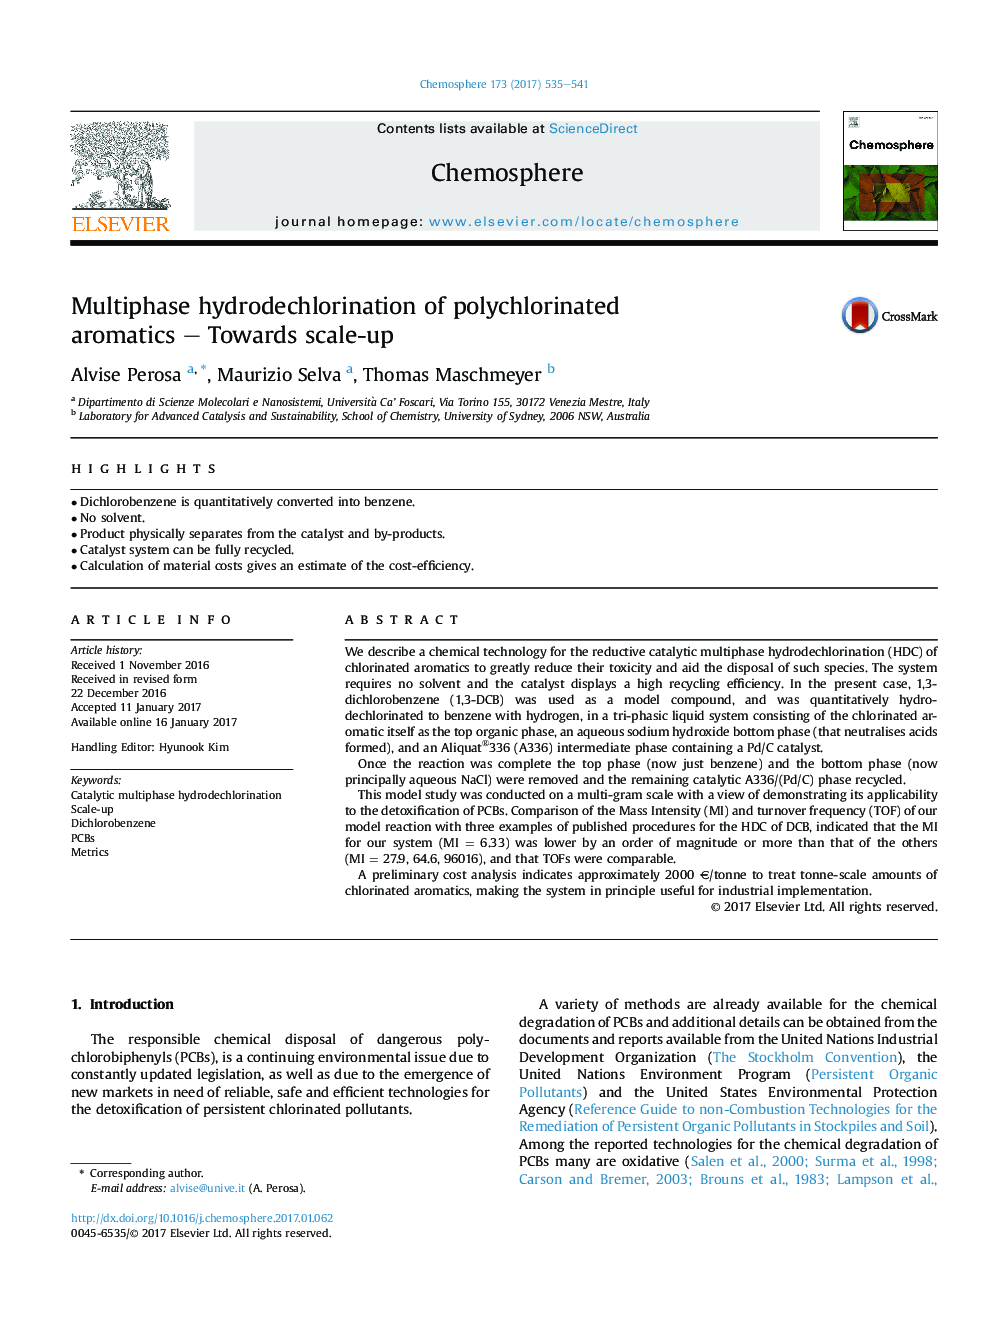 Multiphase hydrodechlorination of polychlorinated aromatics - Towards scale-up